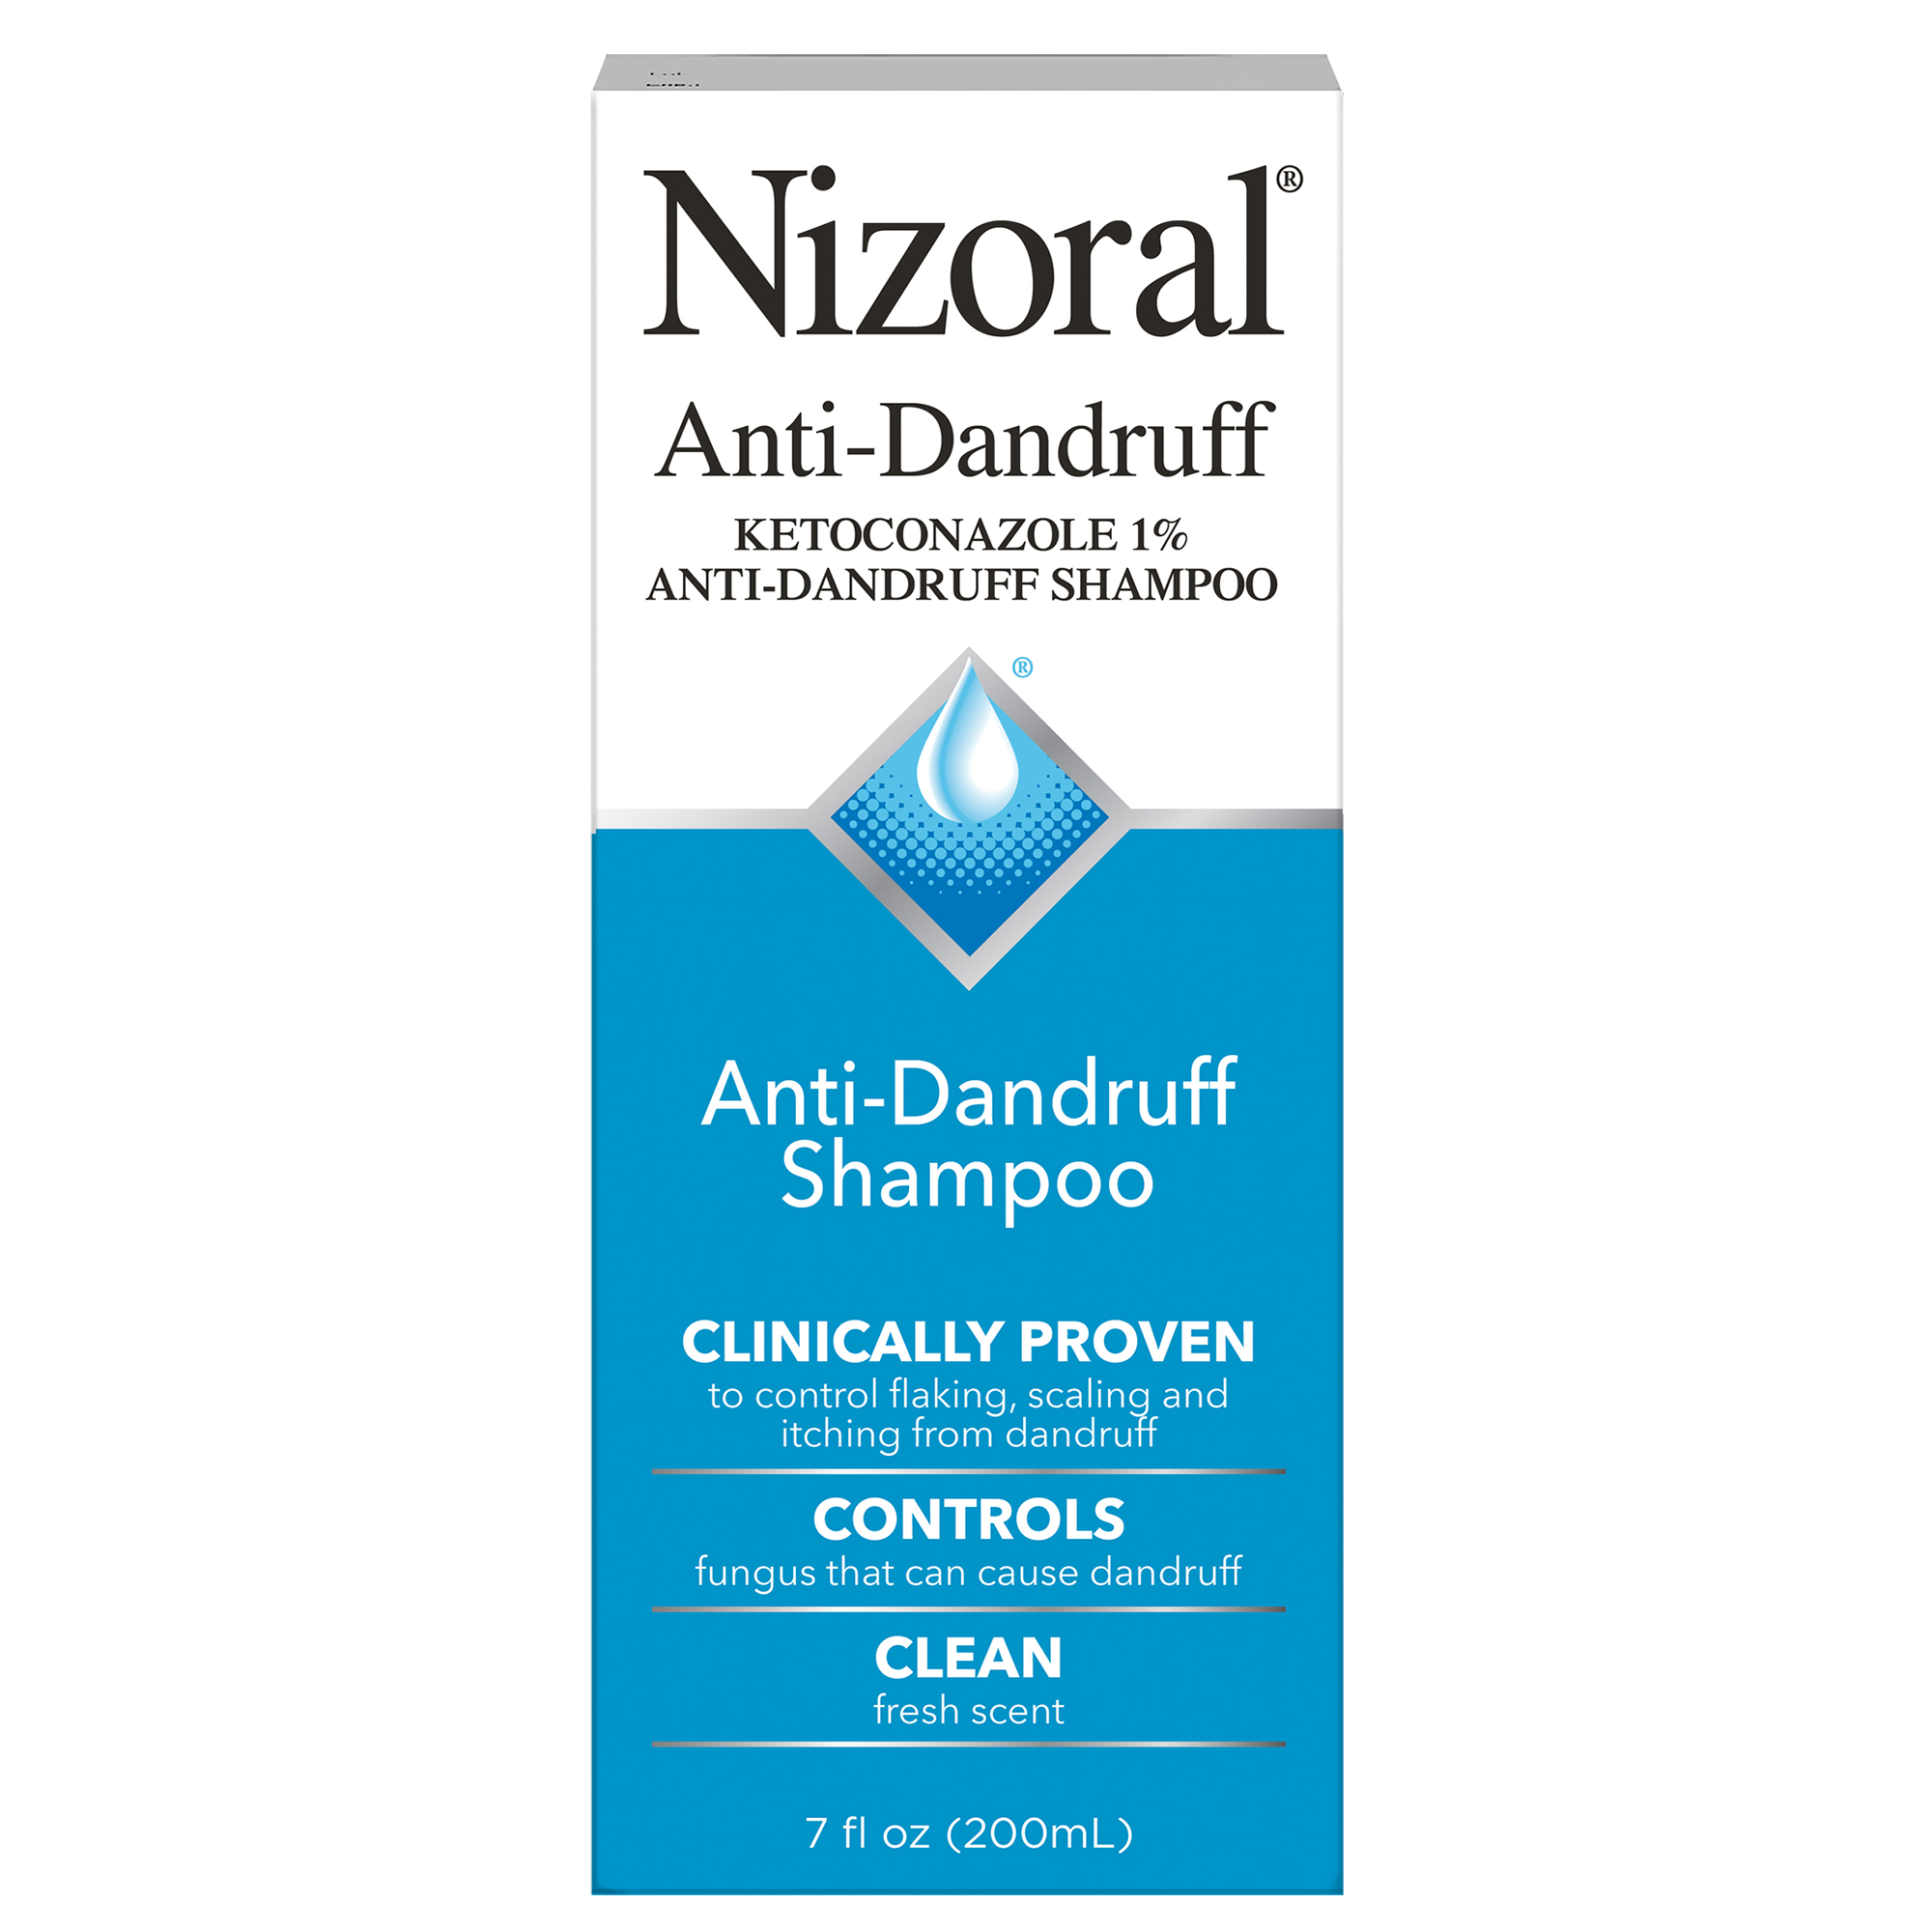 Nizoral Anti Dandruff Shampoo, 7 fl oz - image 1 of 9